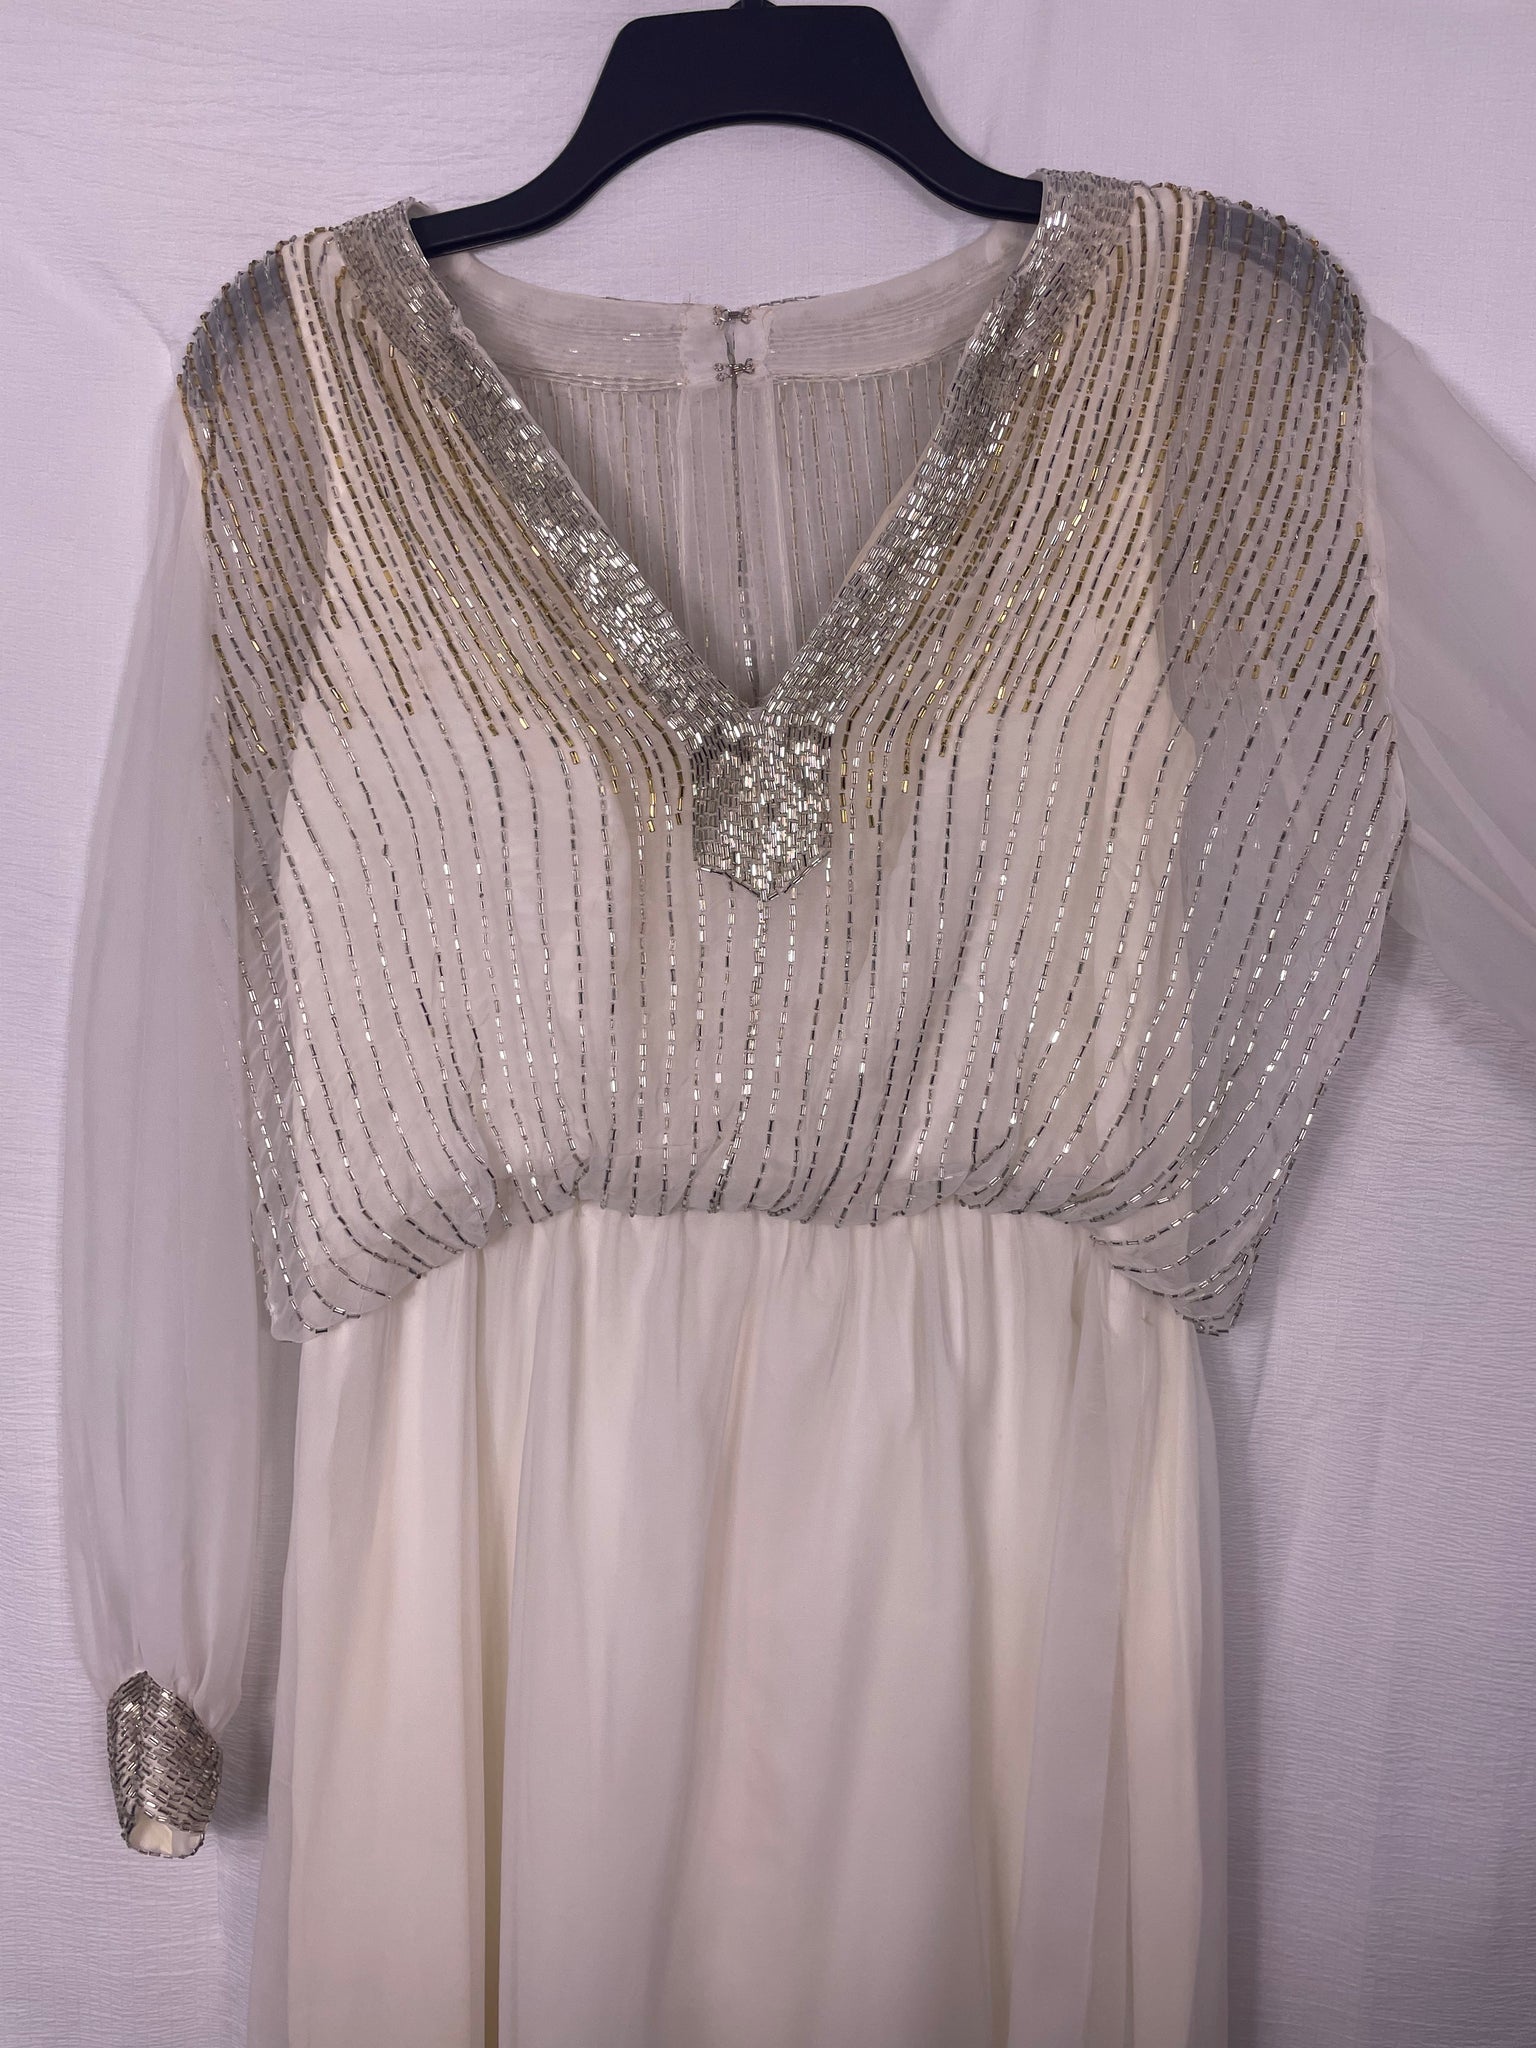 60s handmade blouson dress, Size 8